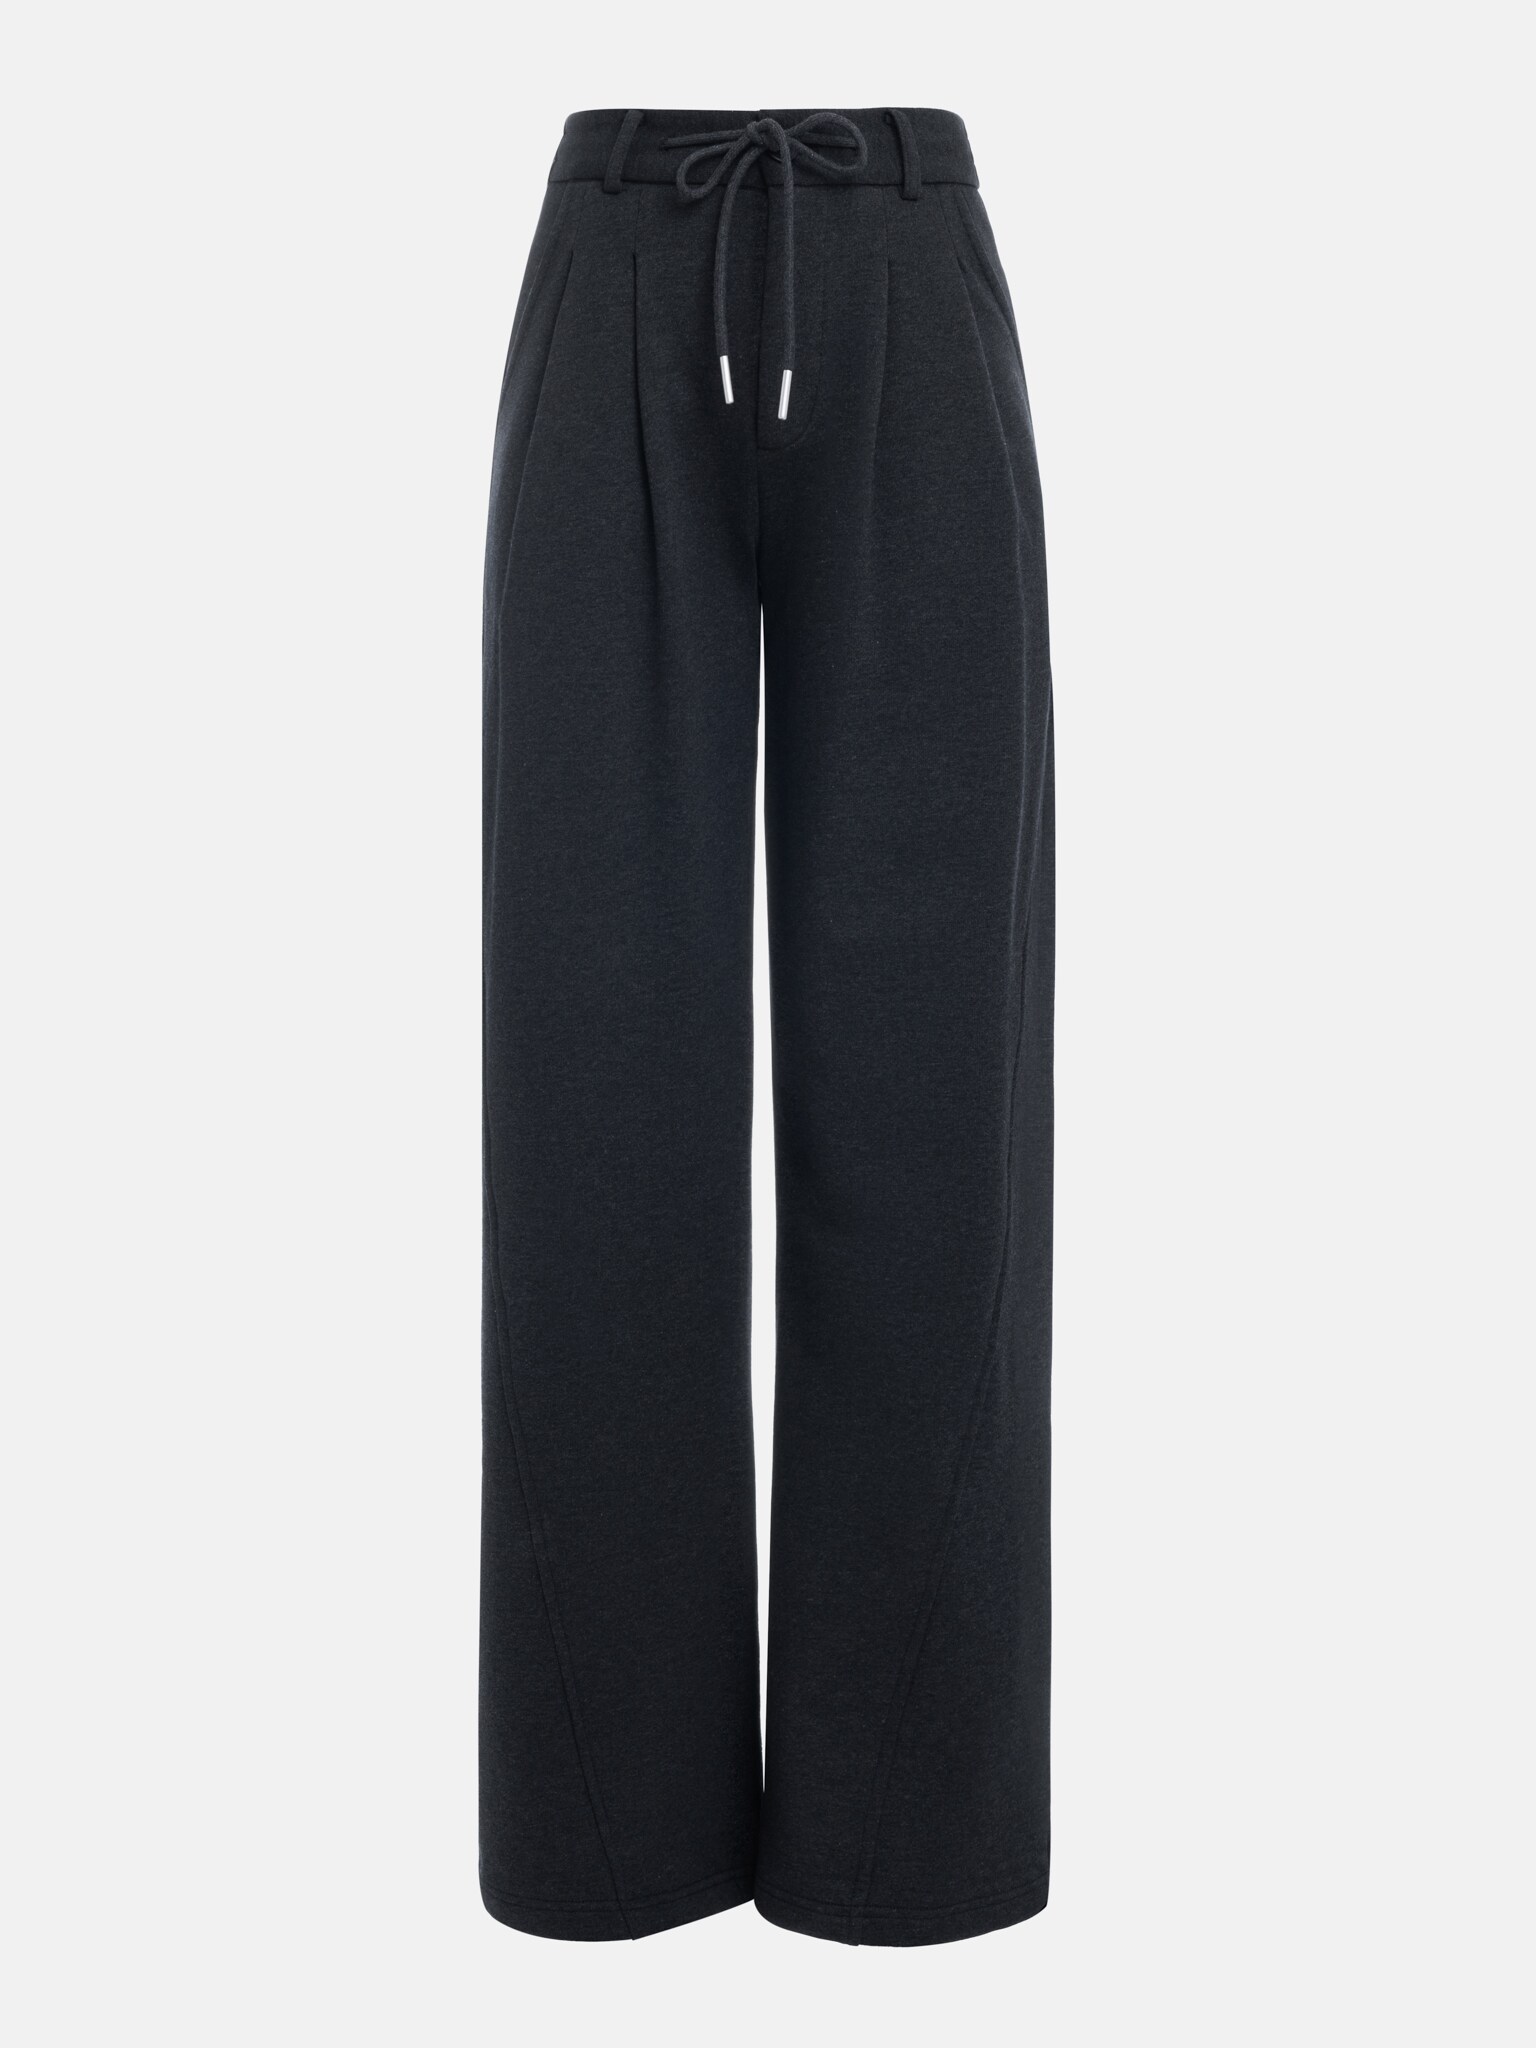 Tie Front Wide Leg Pants | Shop NEW ARRIVALS at Papaya Clothing